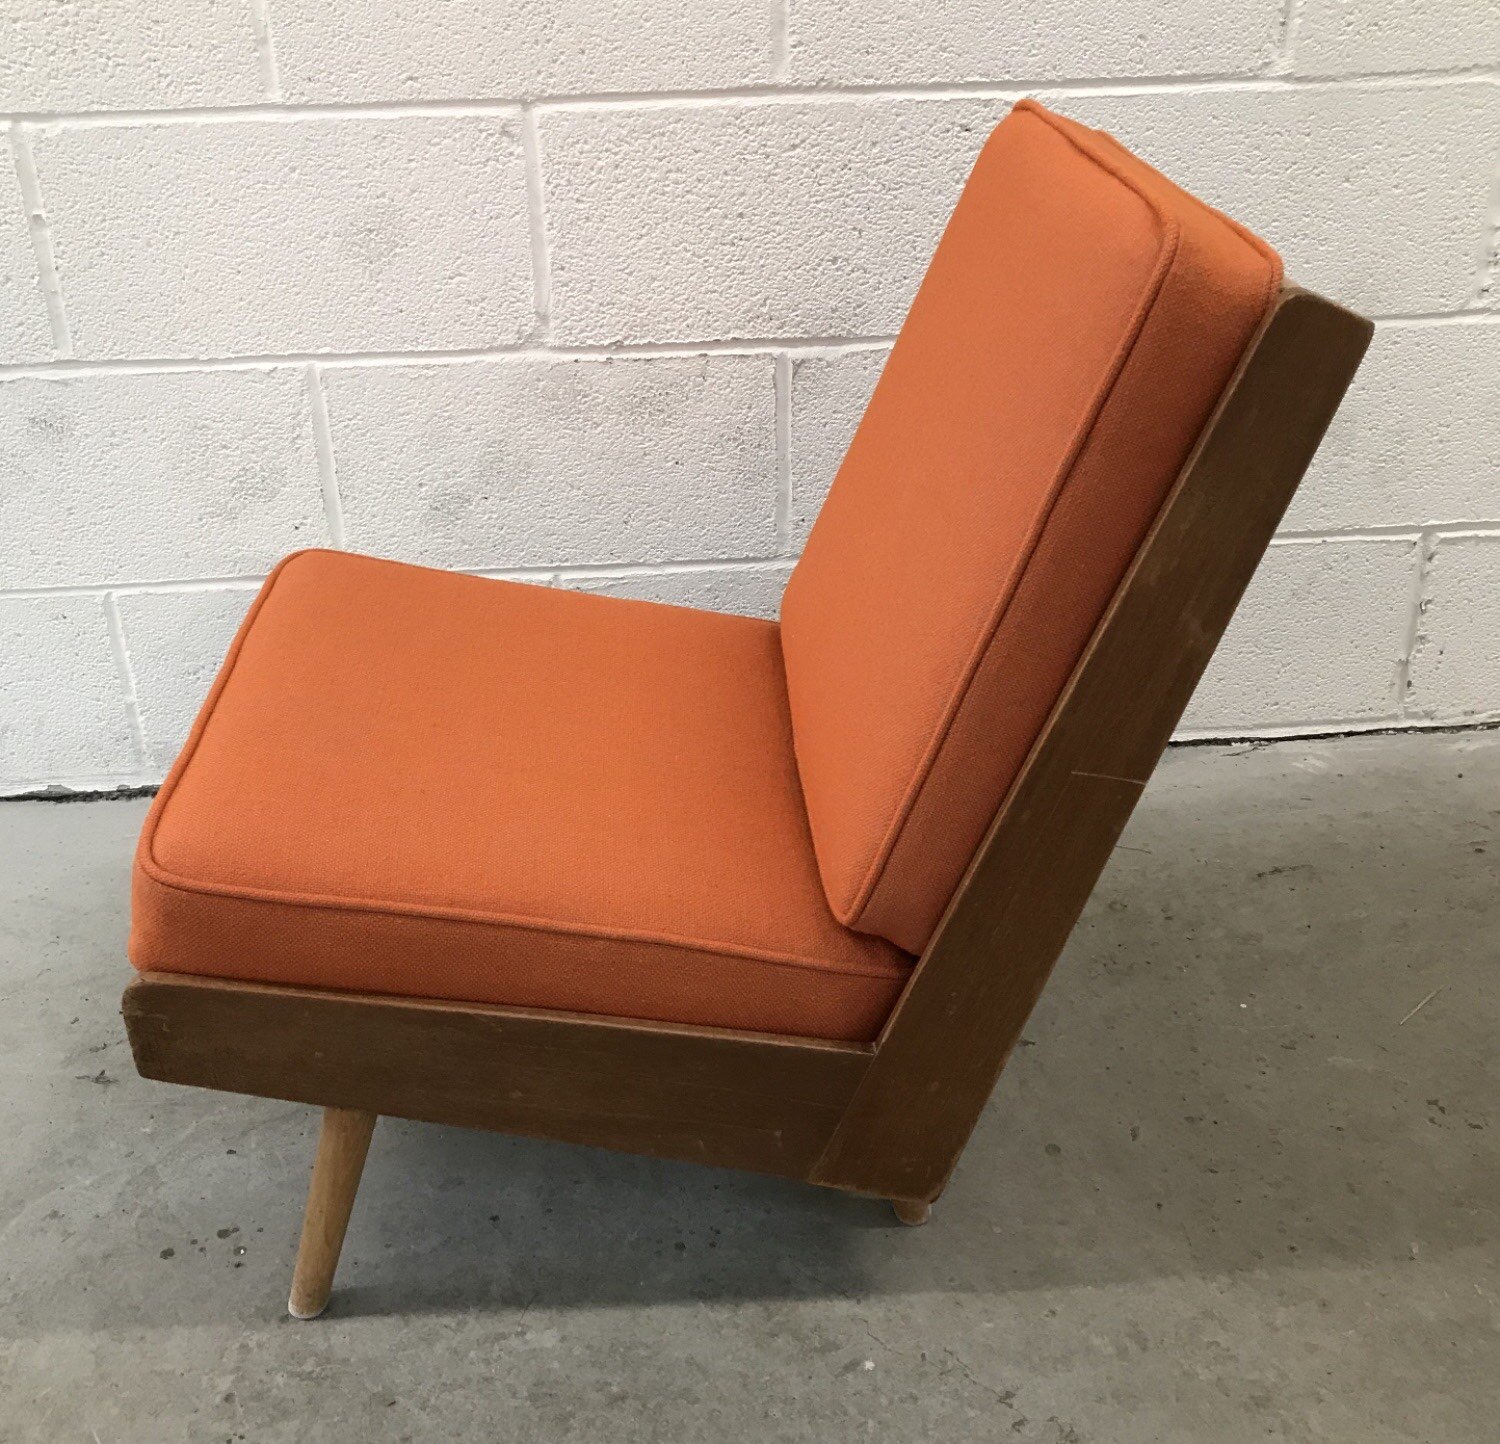 Slat-chair-orange1.jpg